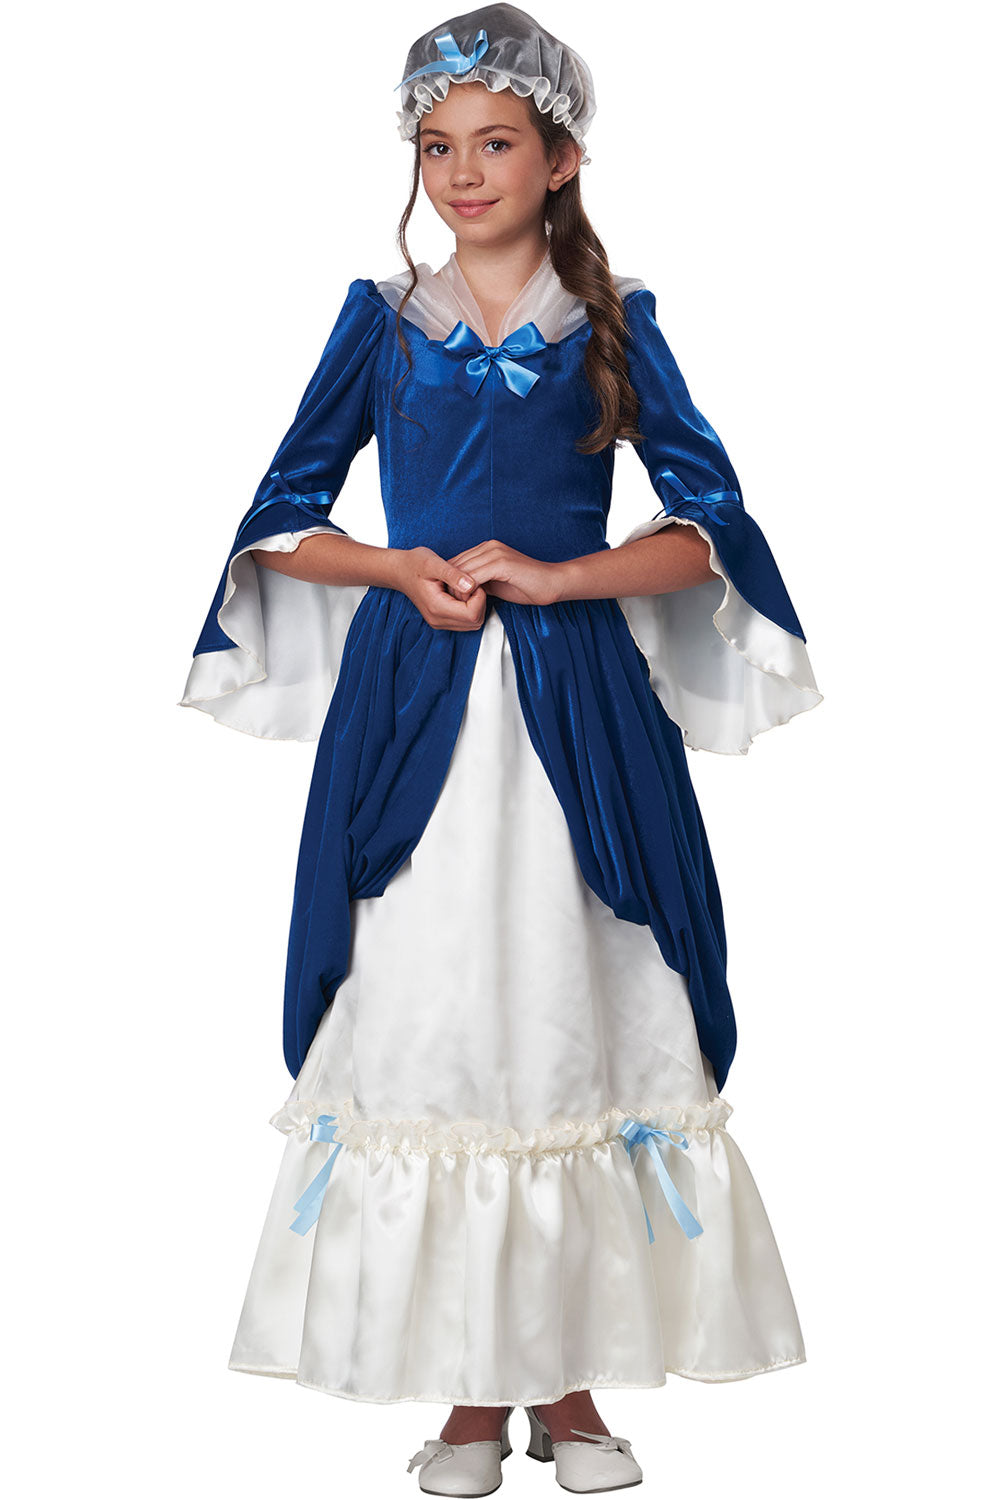 Colonial Era Dress / Martha Washington / Child California Costume 3020/003